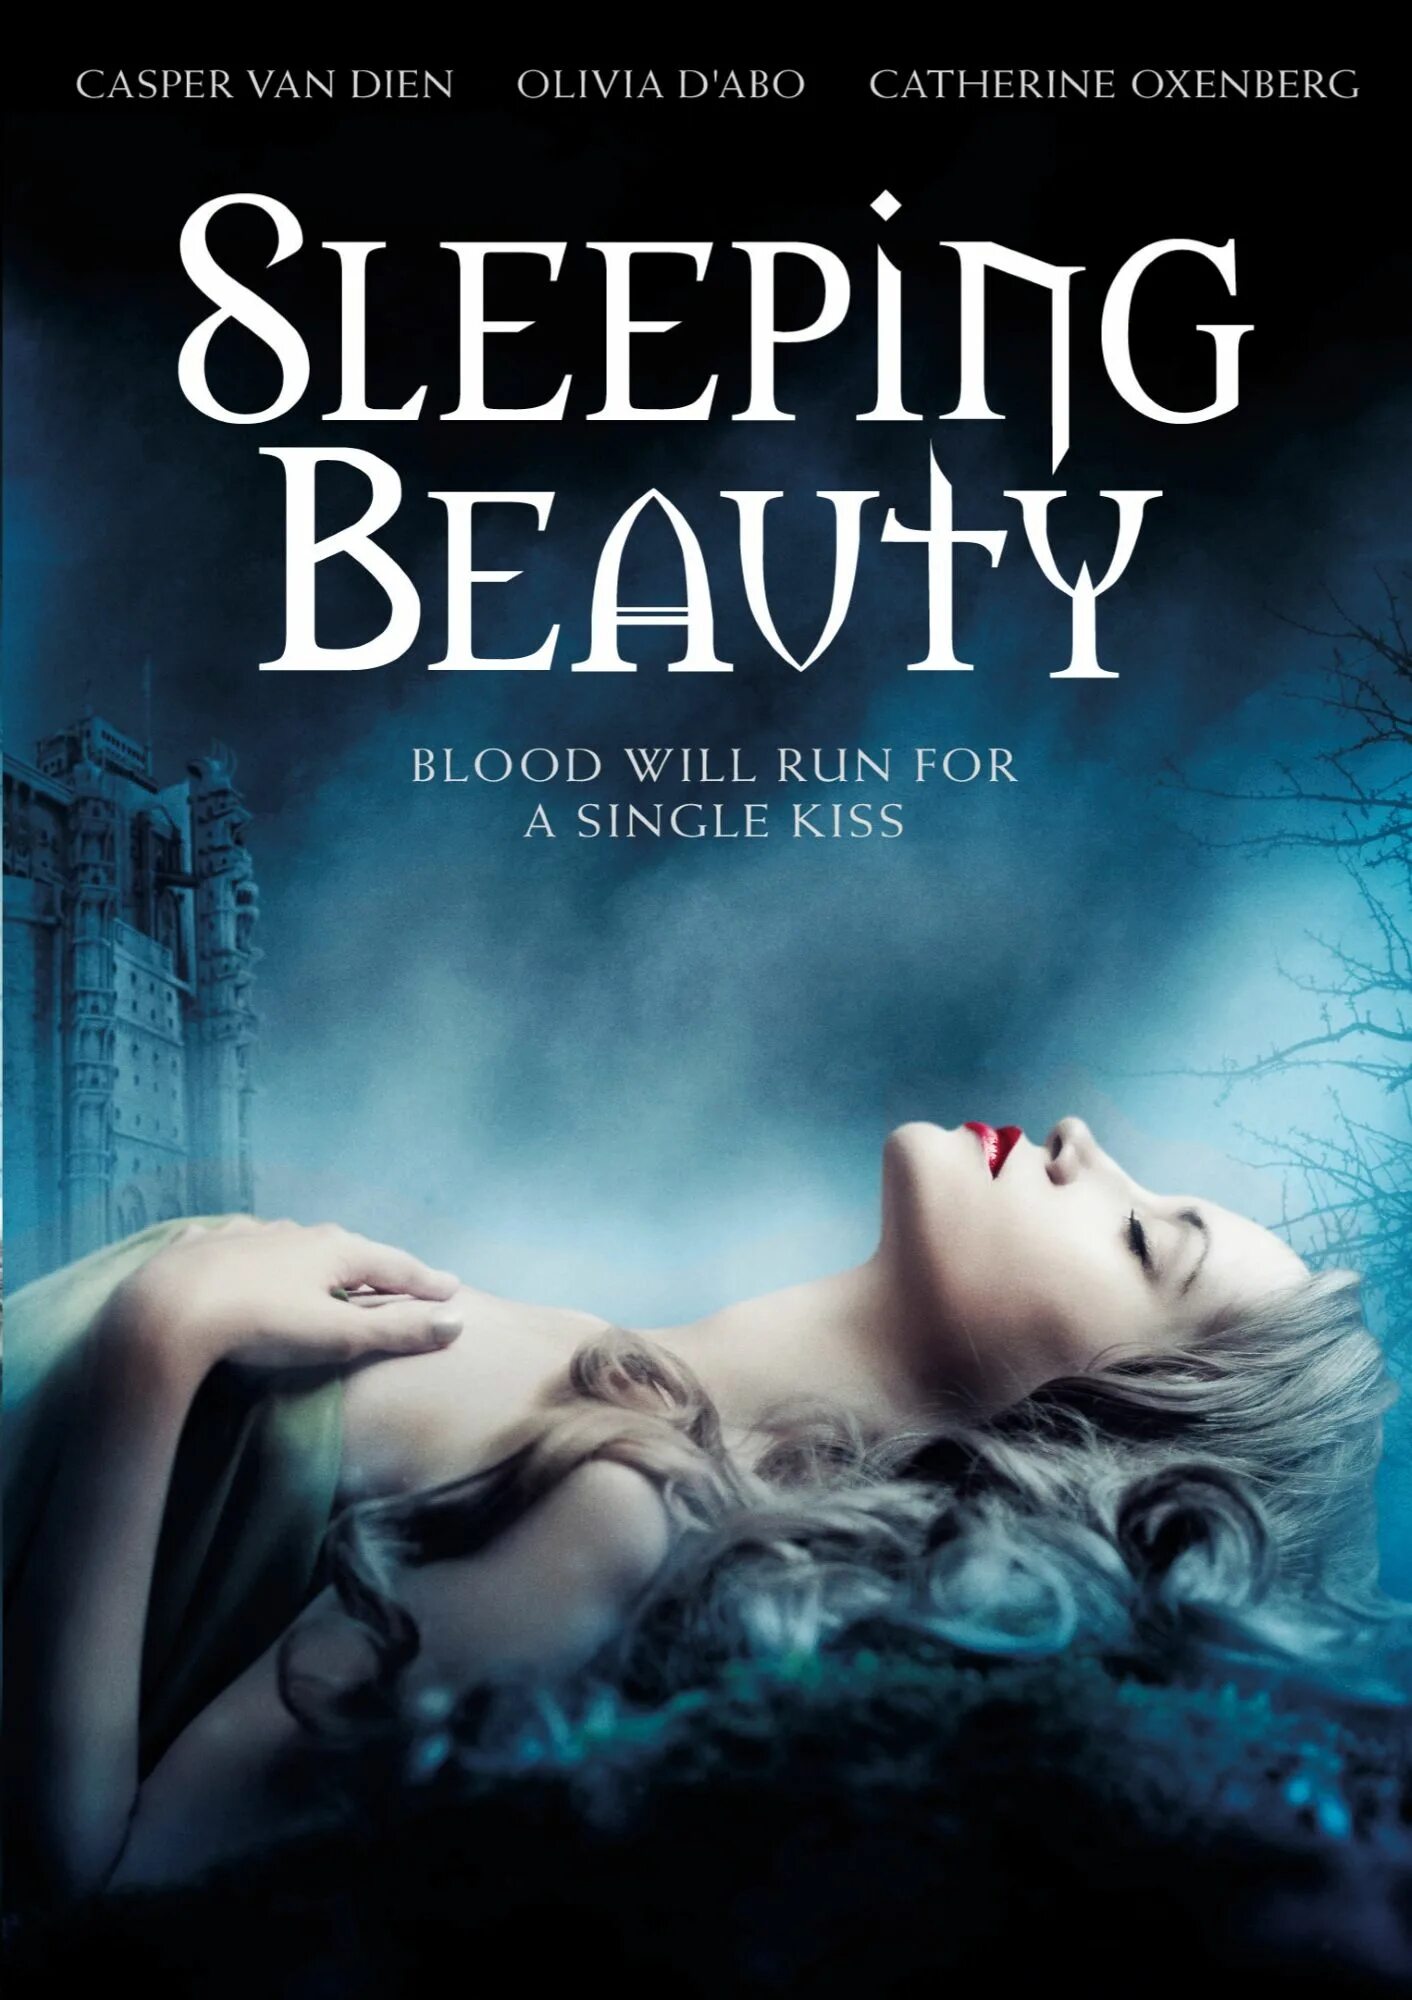 Sleeping movie. Sleeping Beauty 2014. Экранизации спящей красавицы.